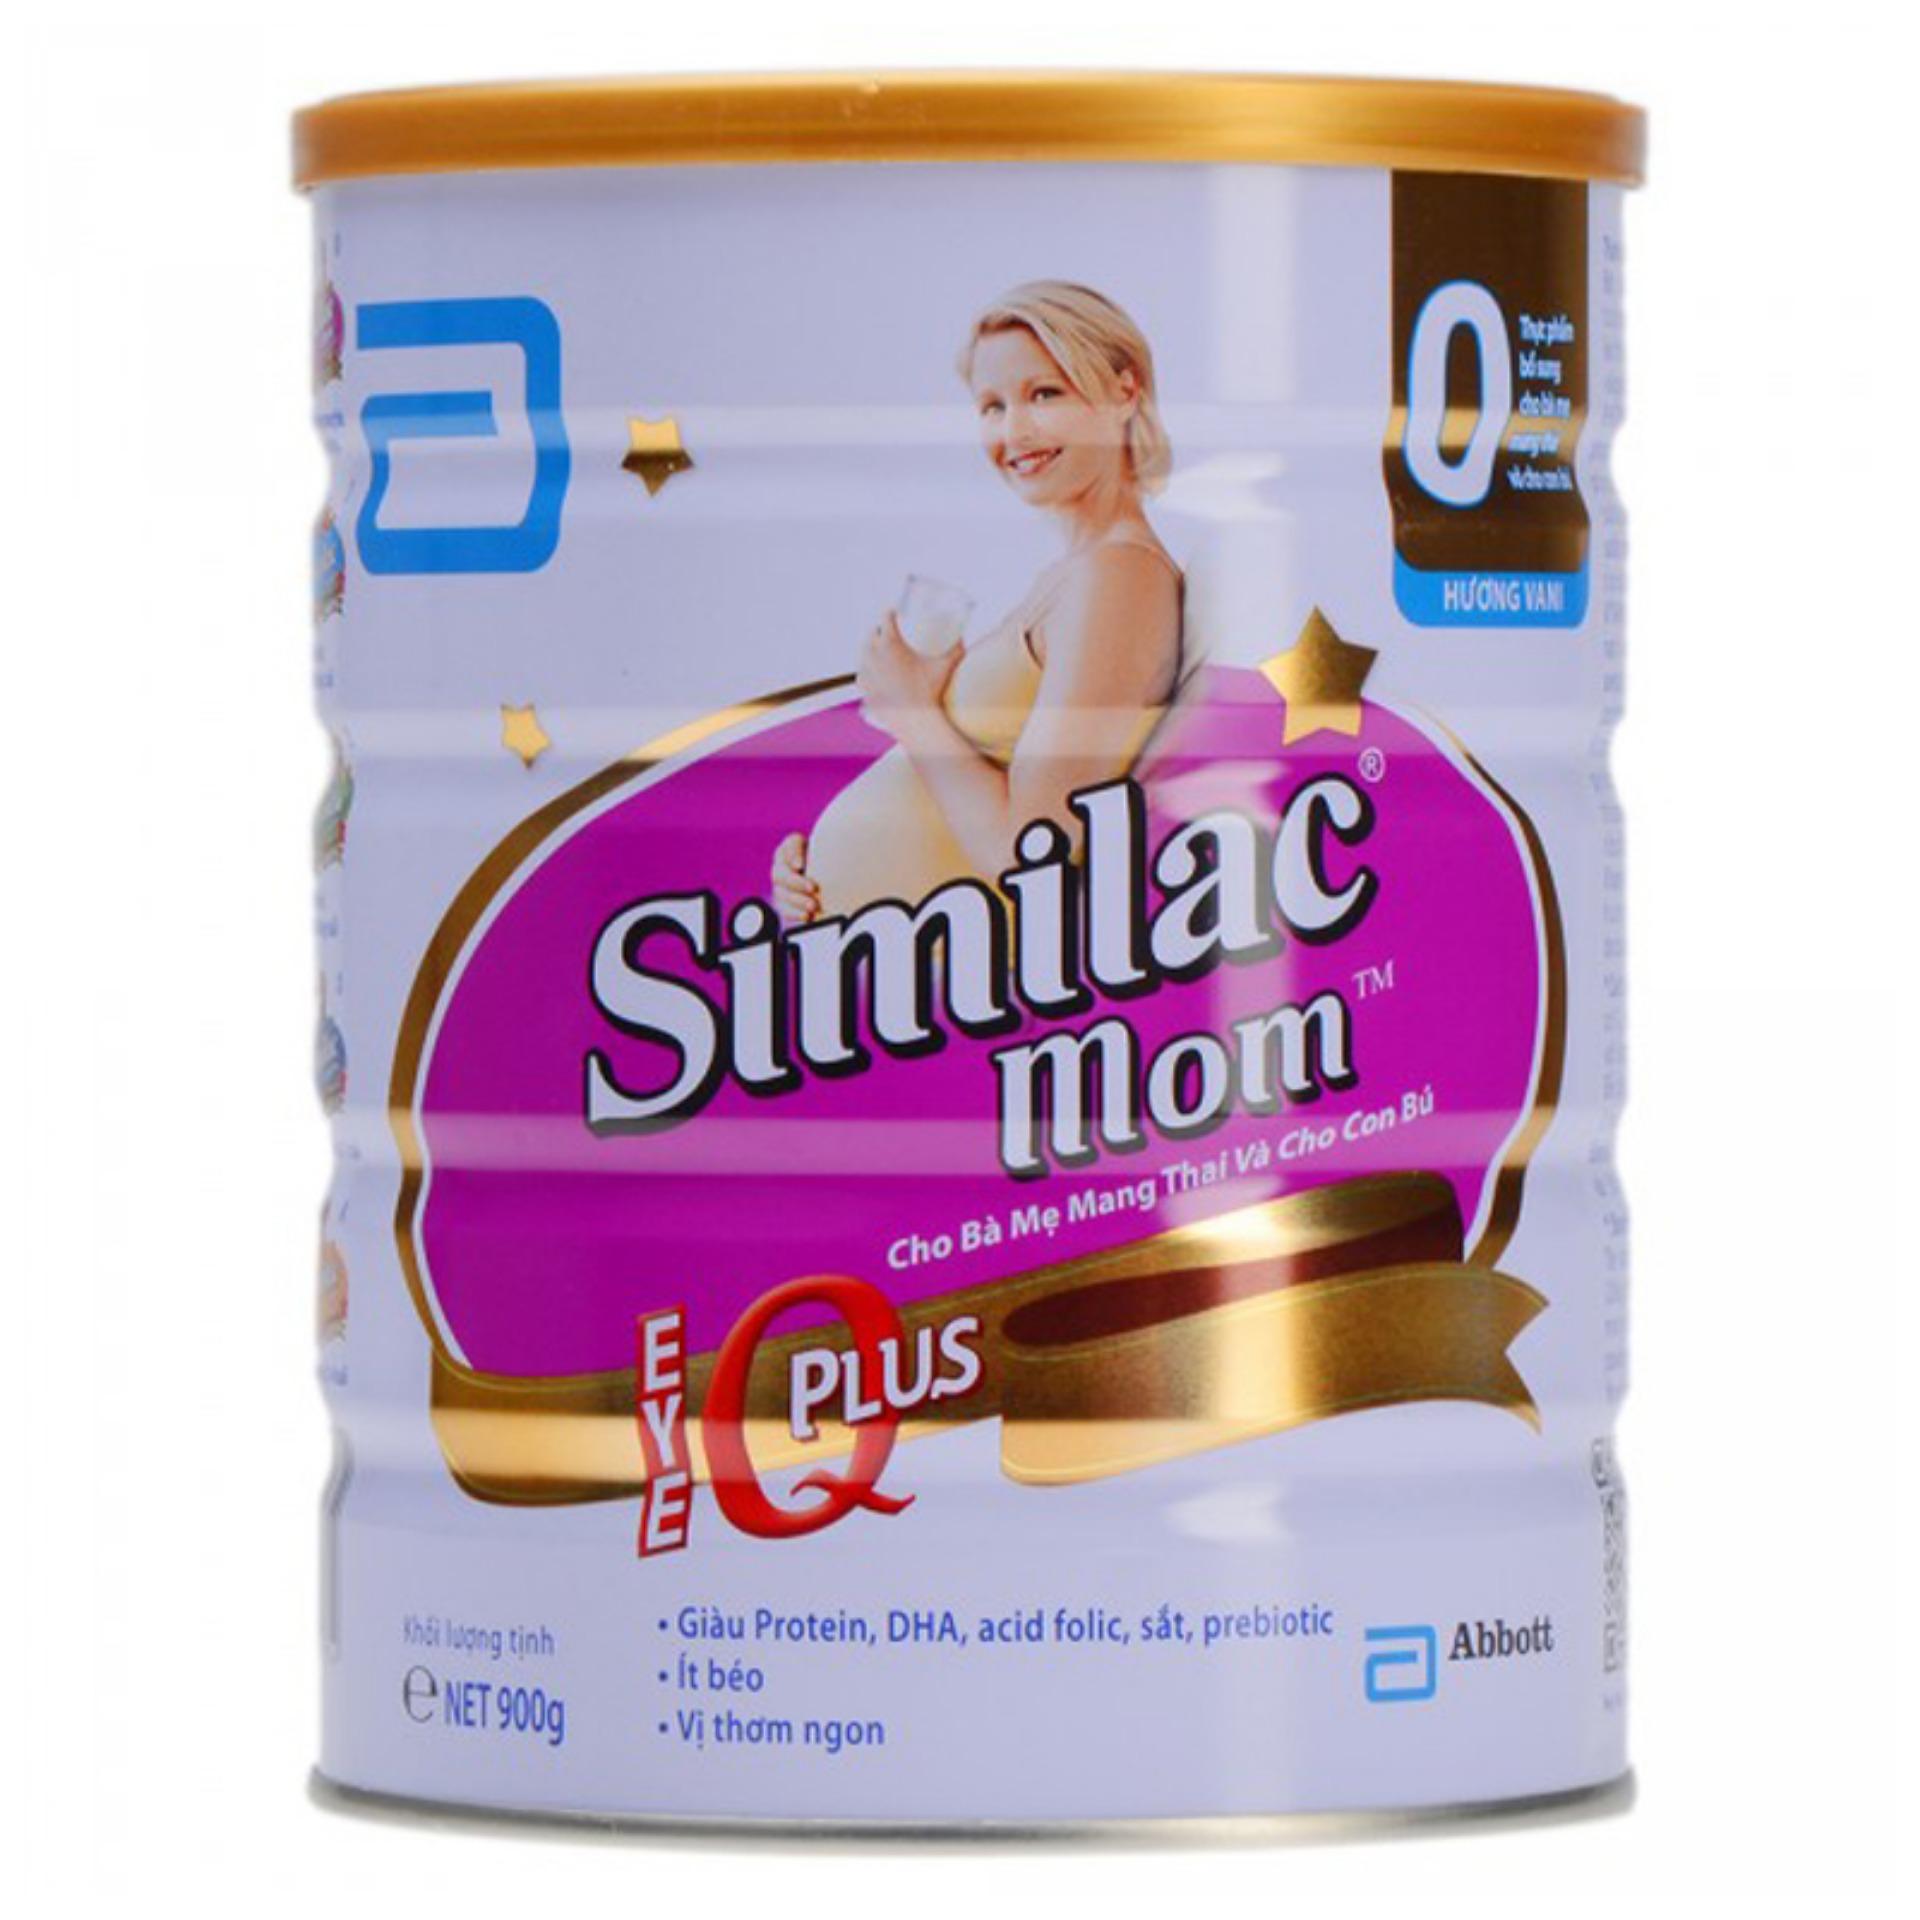 Sữa Similac mum hương vani 900g